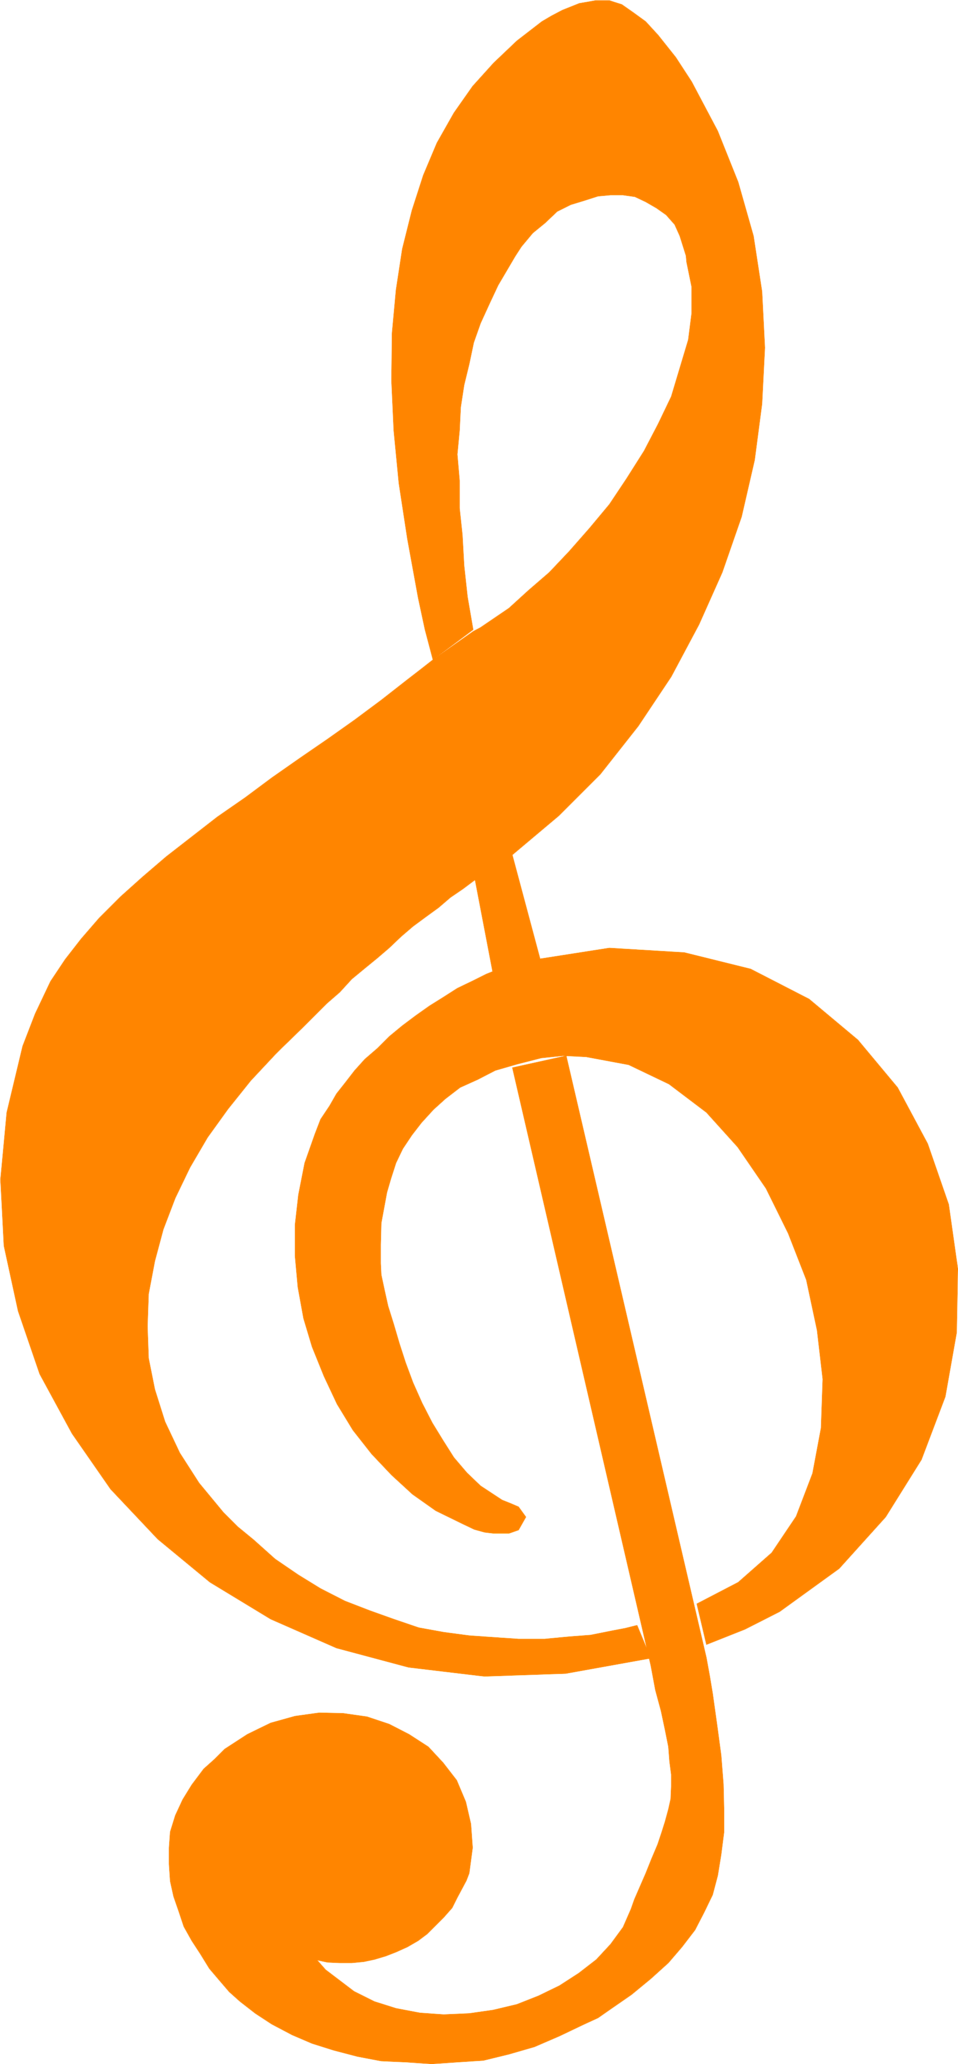 clip art of music symbols - photo #30